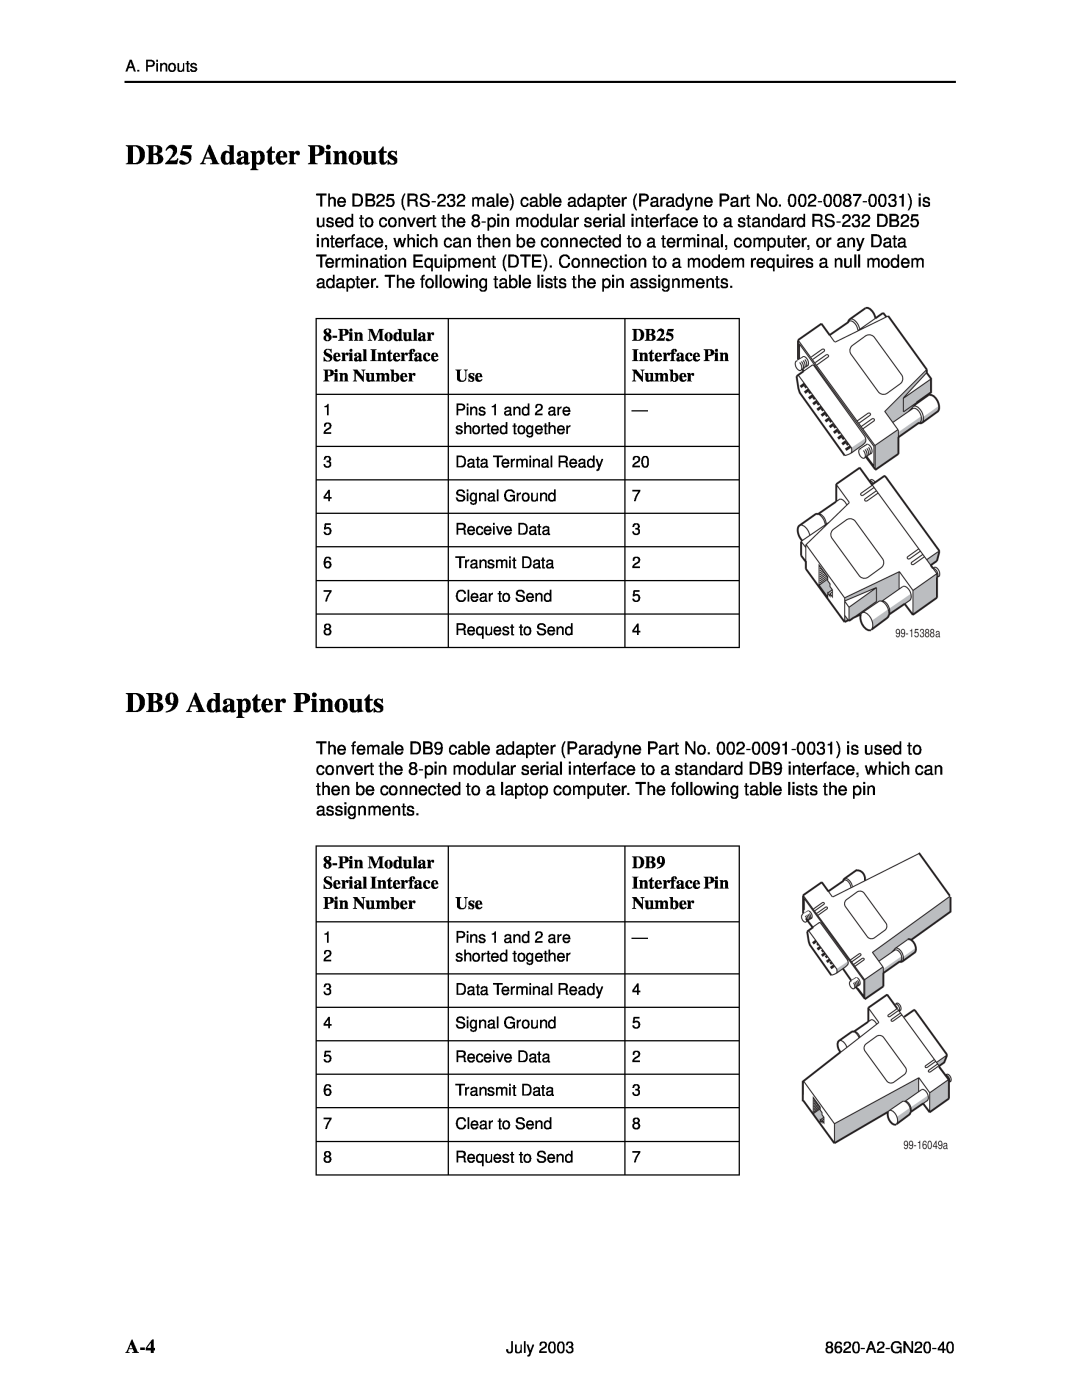 Paradyne Hotwire 8620 GranDSLAM Installation Guide manual DB25 Adapter Pinouts, DB9 Adapter Pinouts 